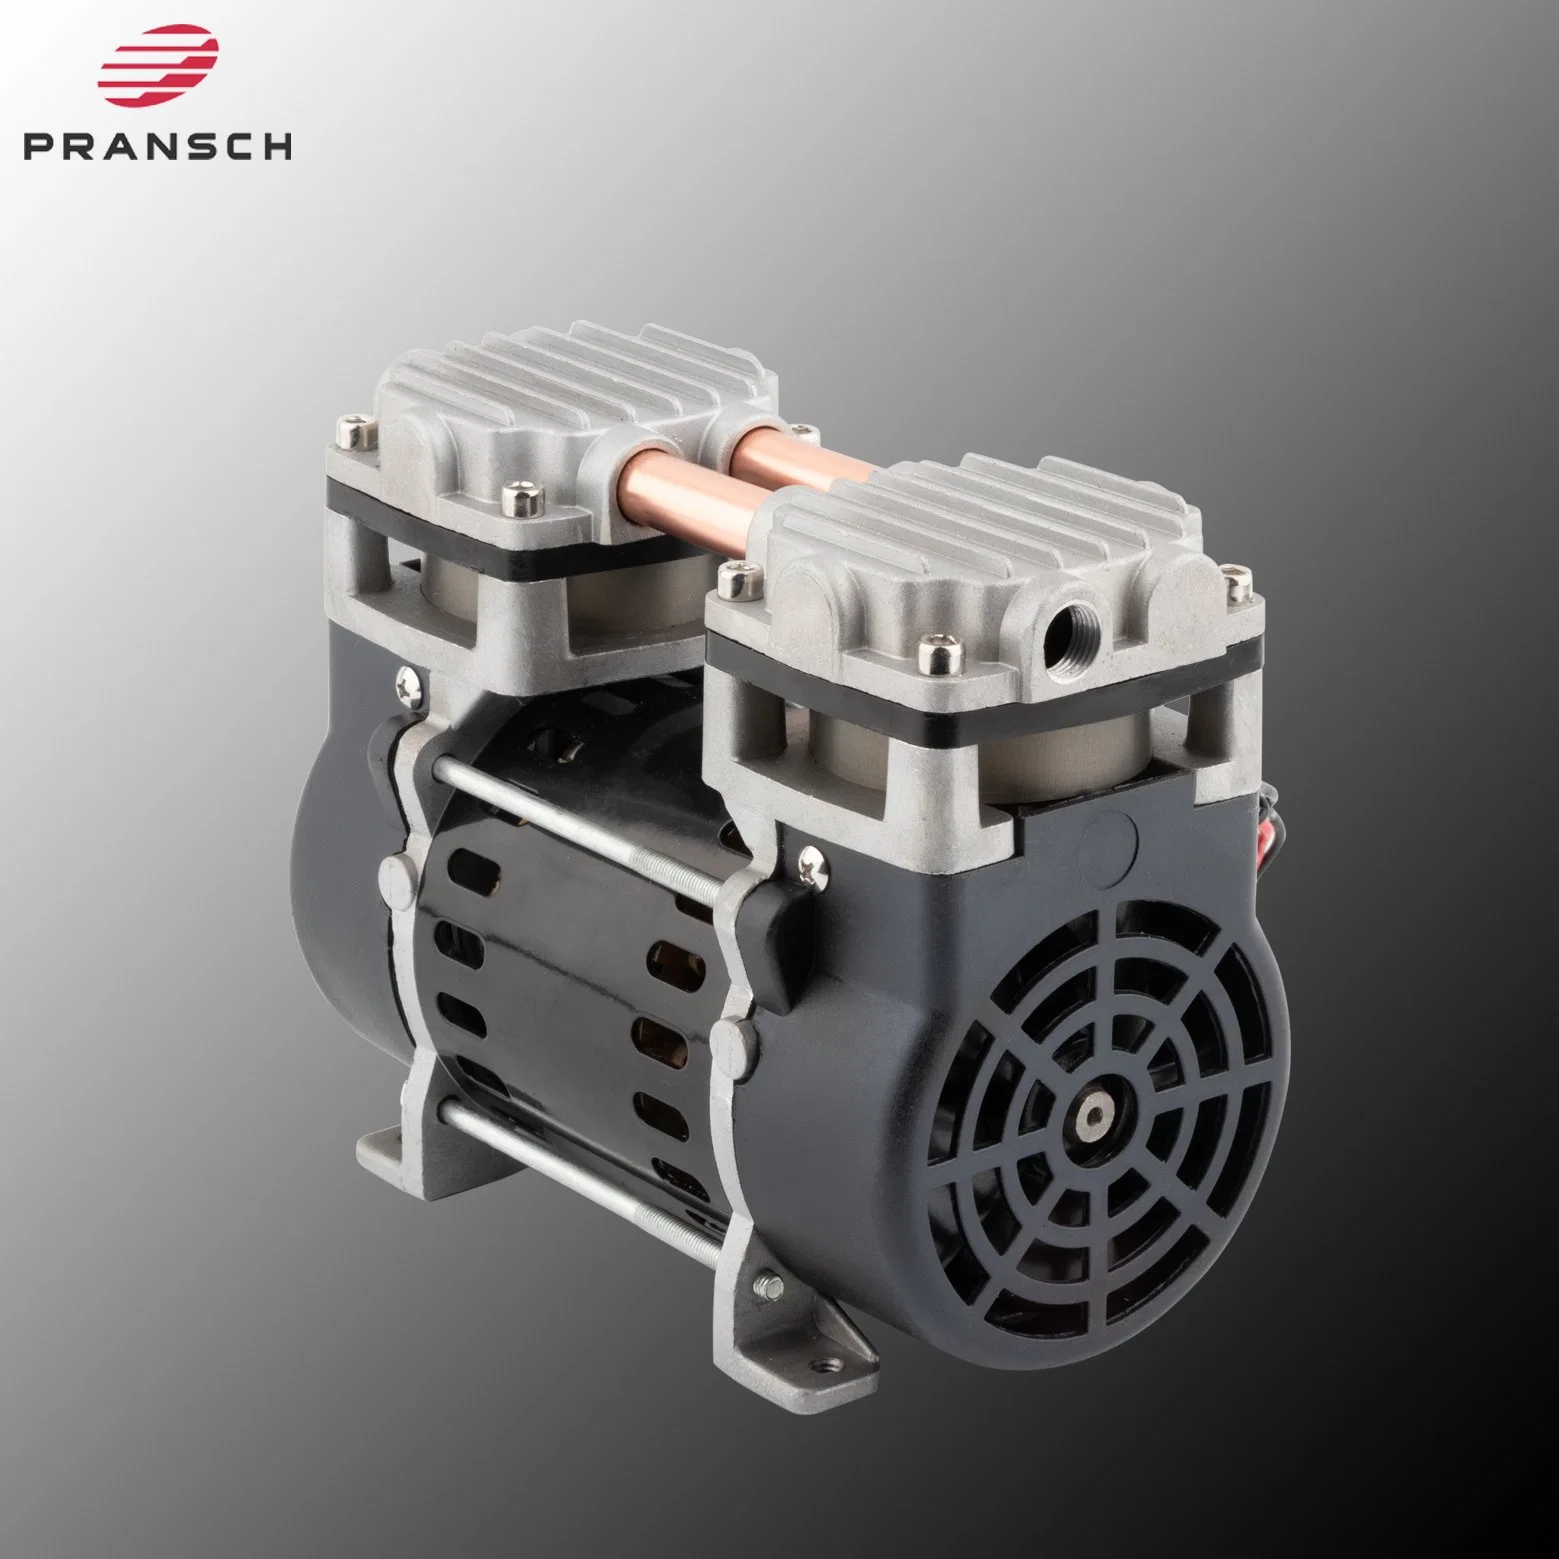 Pm300c 12 V DC Mini portátiles industriales Oil-Less Oilless silencioso compresor de aire de pistón